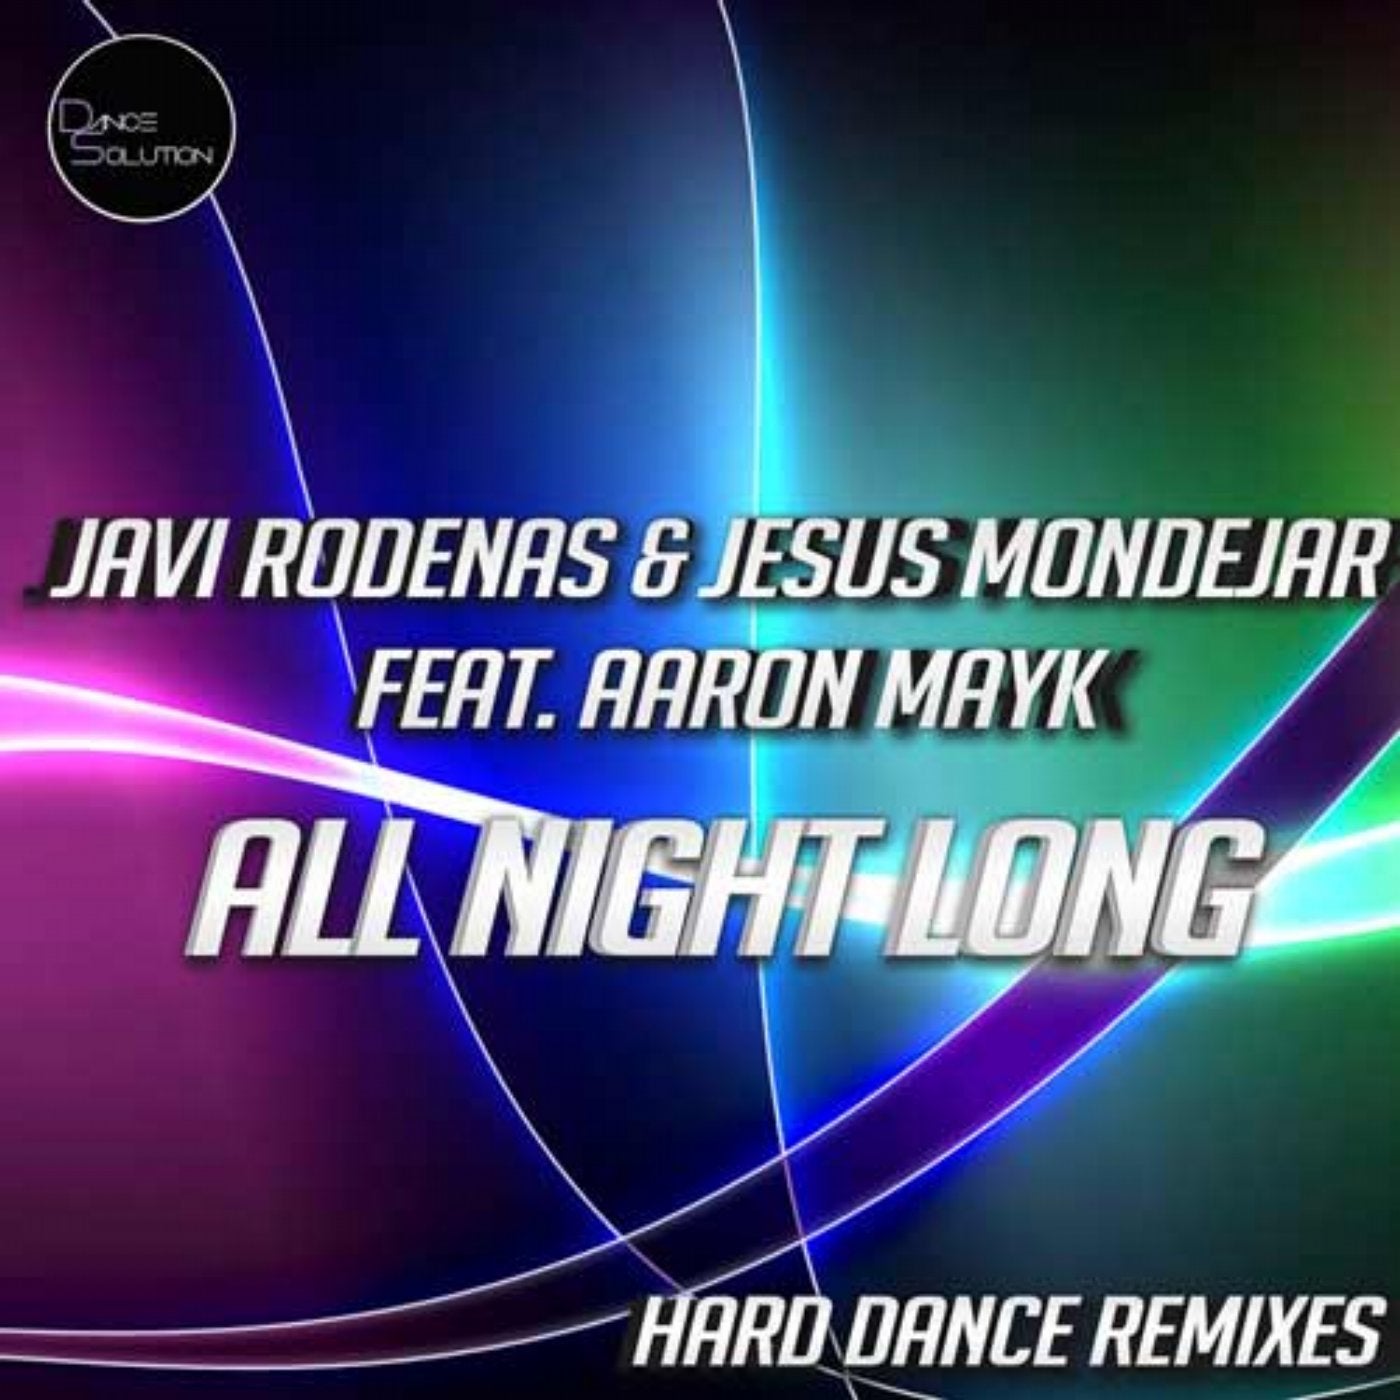 All Night Long (Hard Dance Remixes)